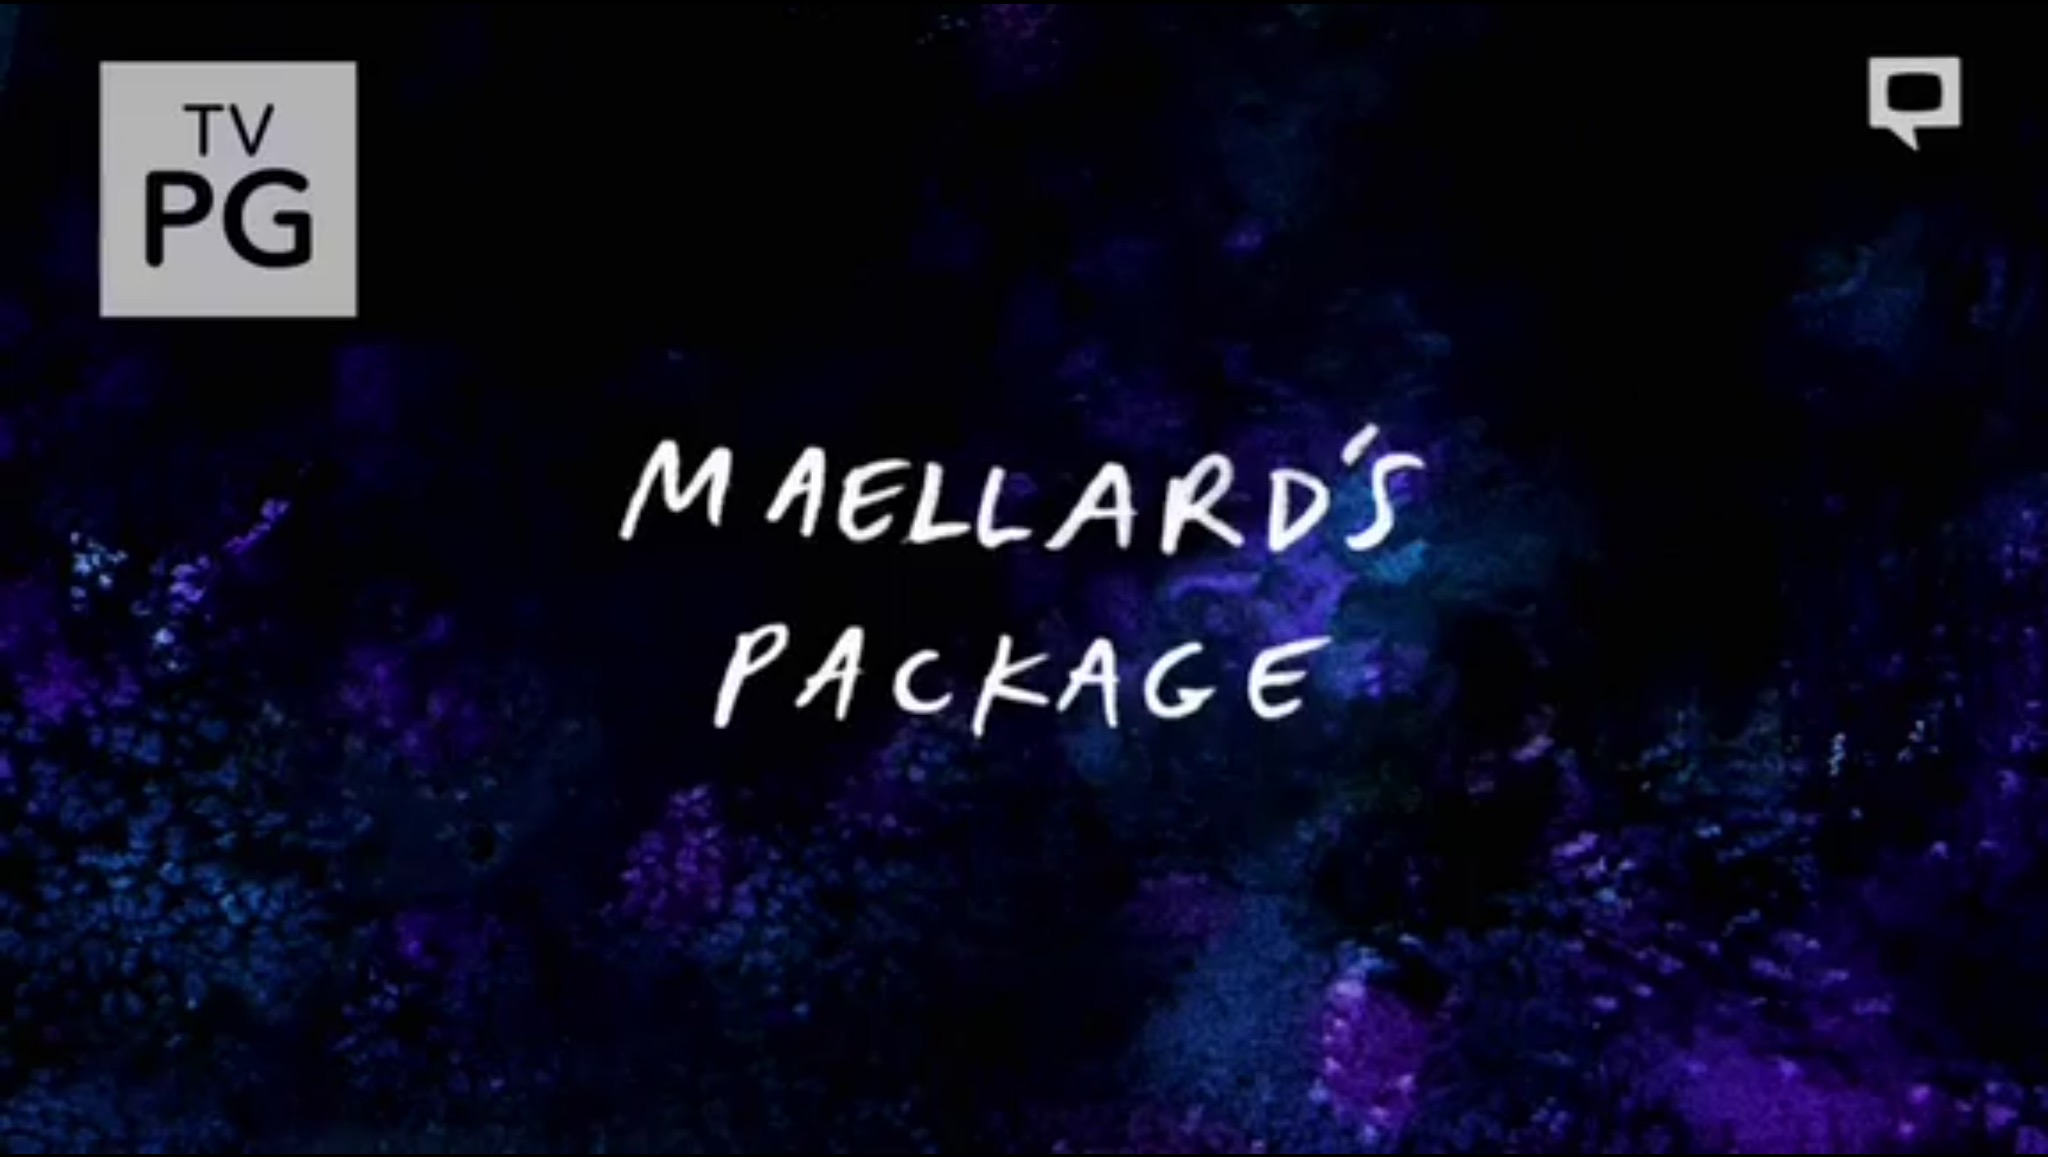 26 серия 7 сезона Maellard's Package